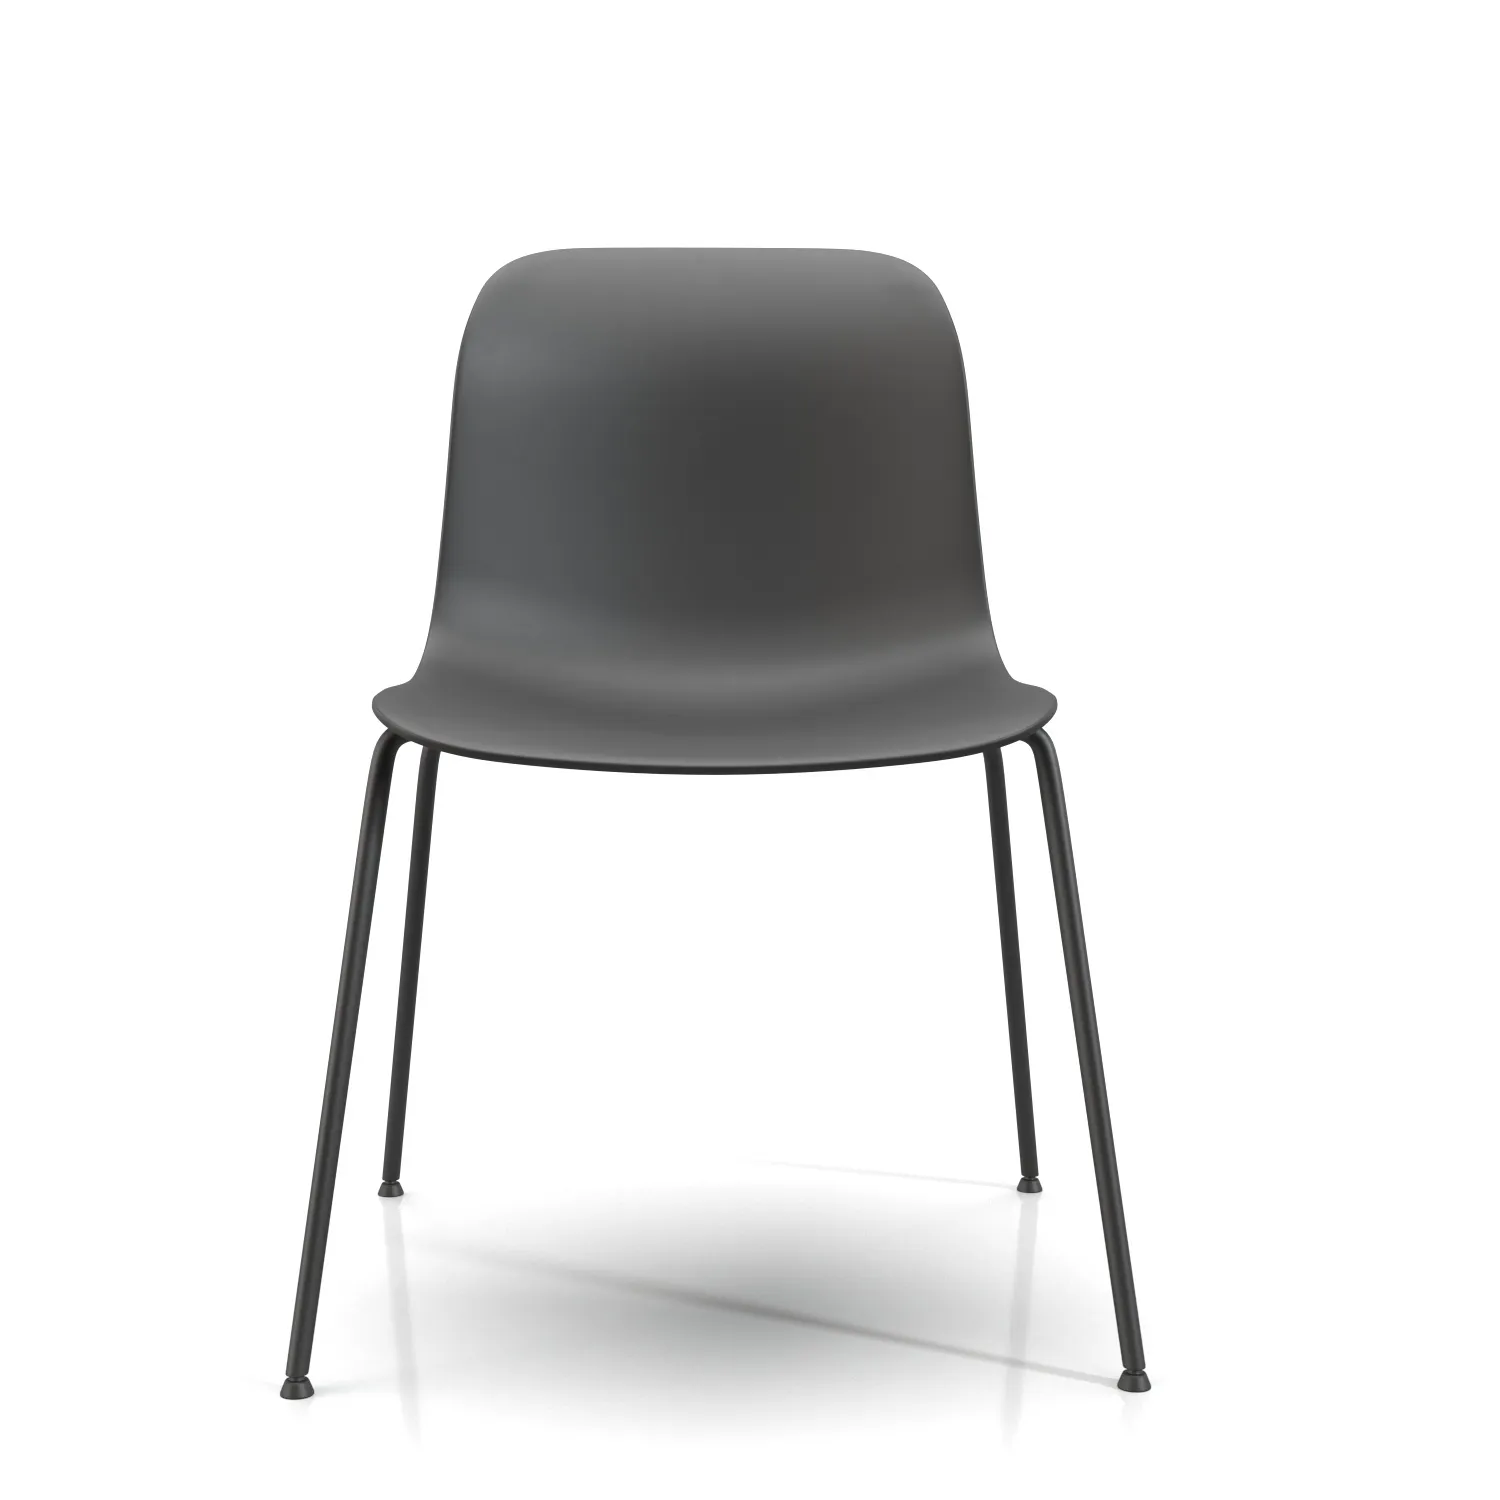 Infiniti Pure Loop Binuance Chair PBR 3D Model_04